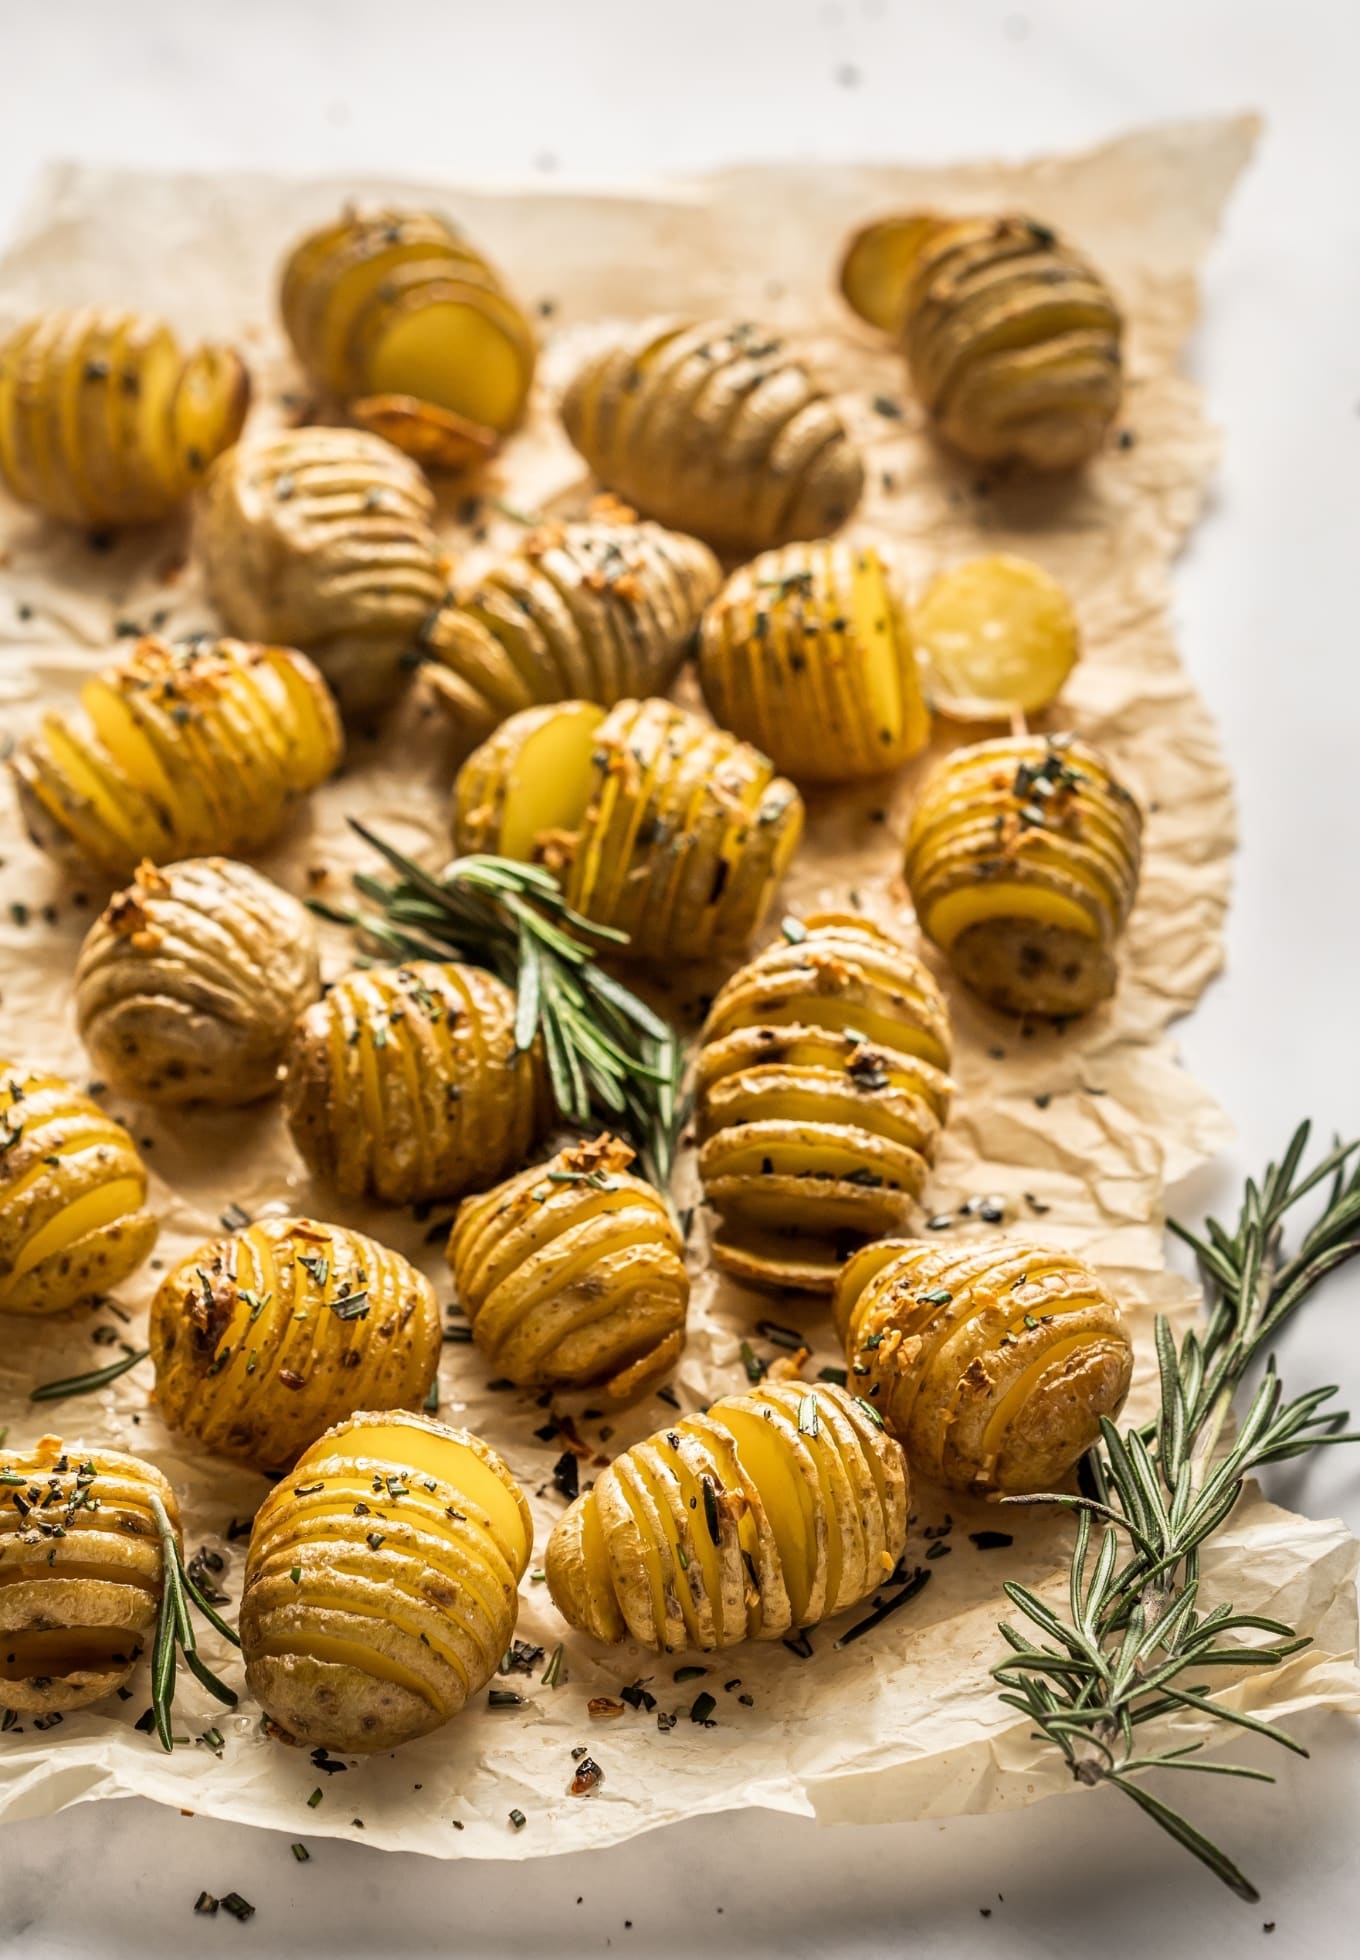 Garlic Herb Hasselback Potatoes